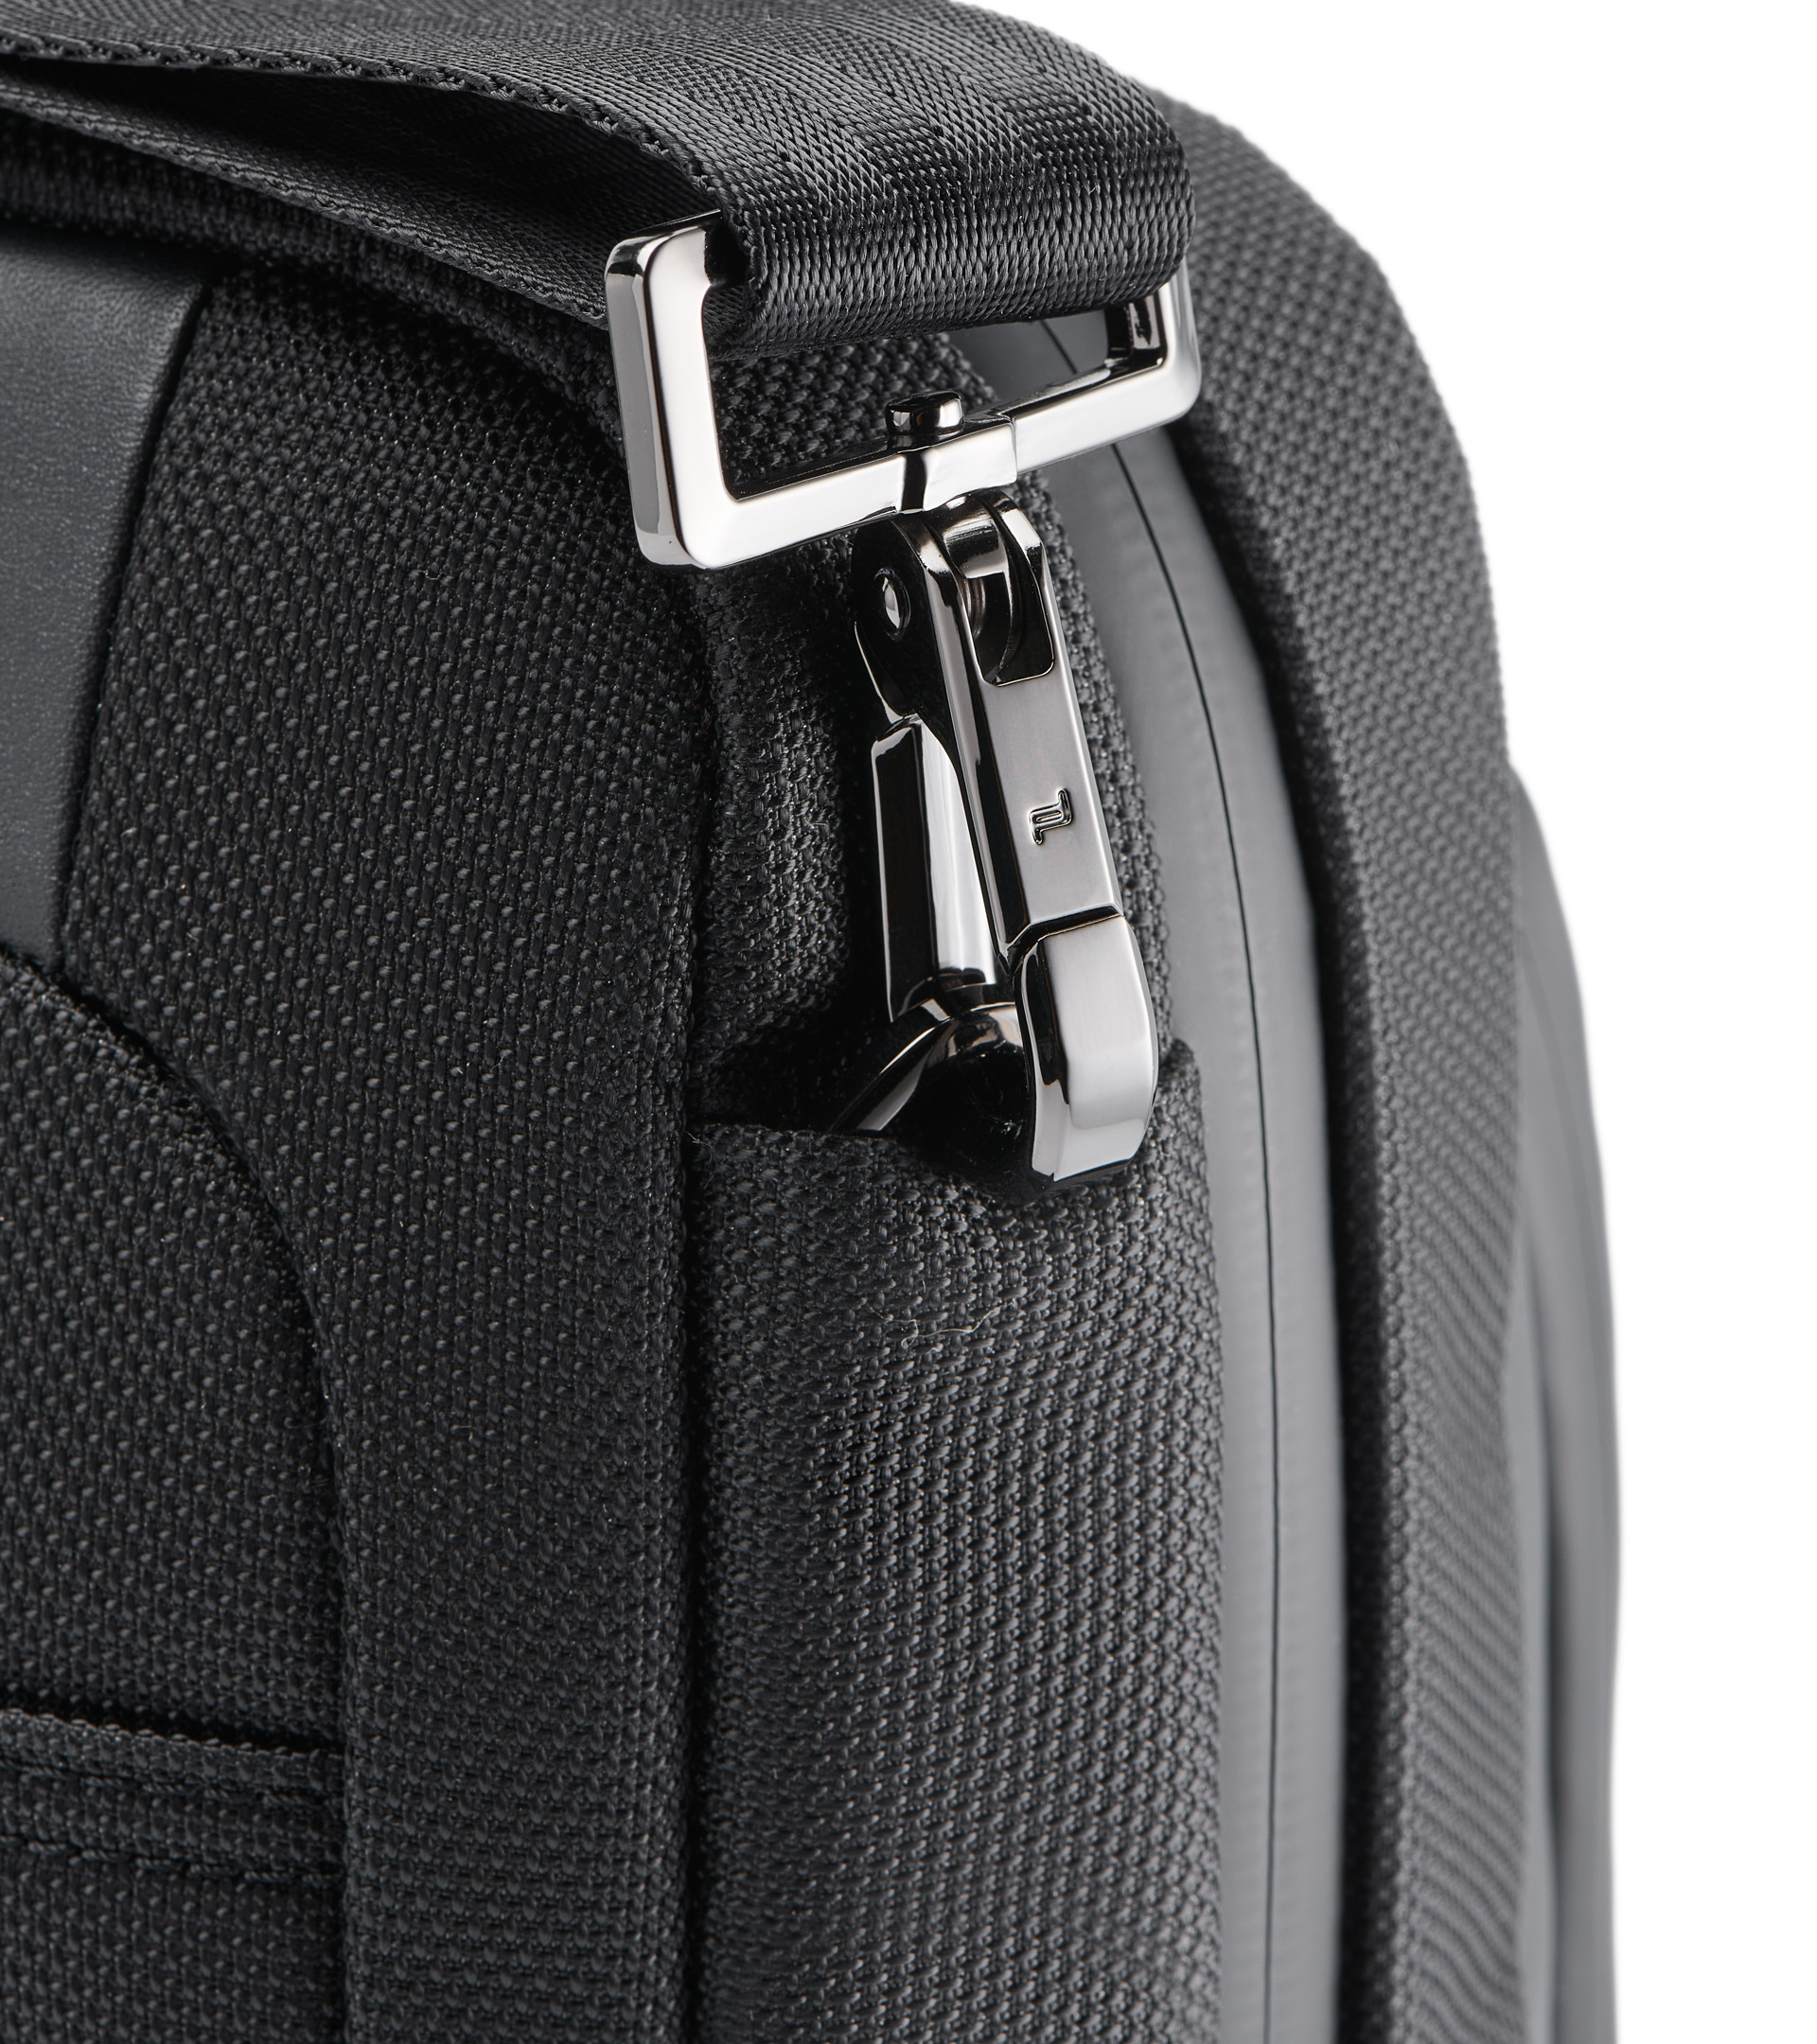 Porsche Design Men’s Cargon 2.5 BriefBag FS Top-handle Bag